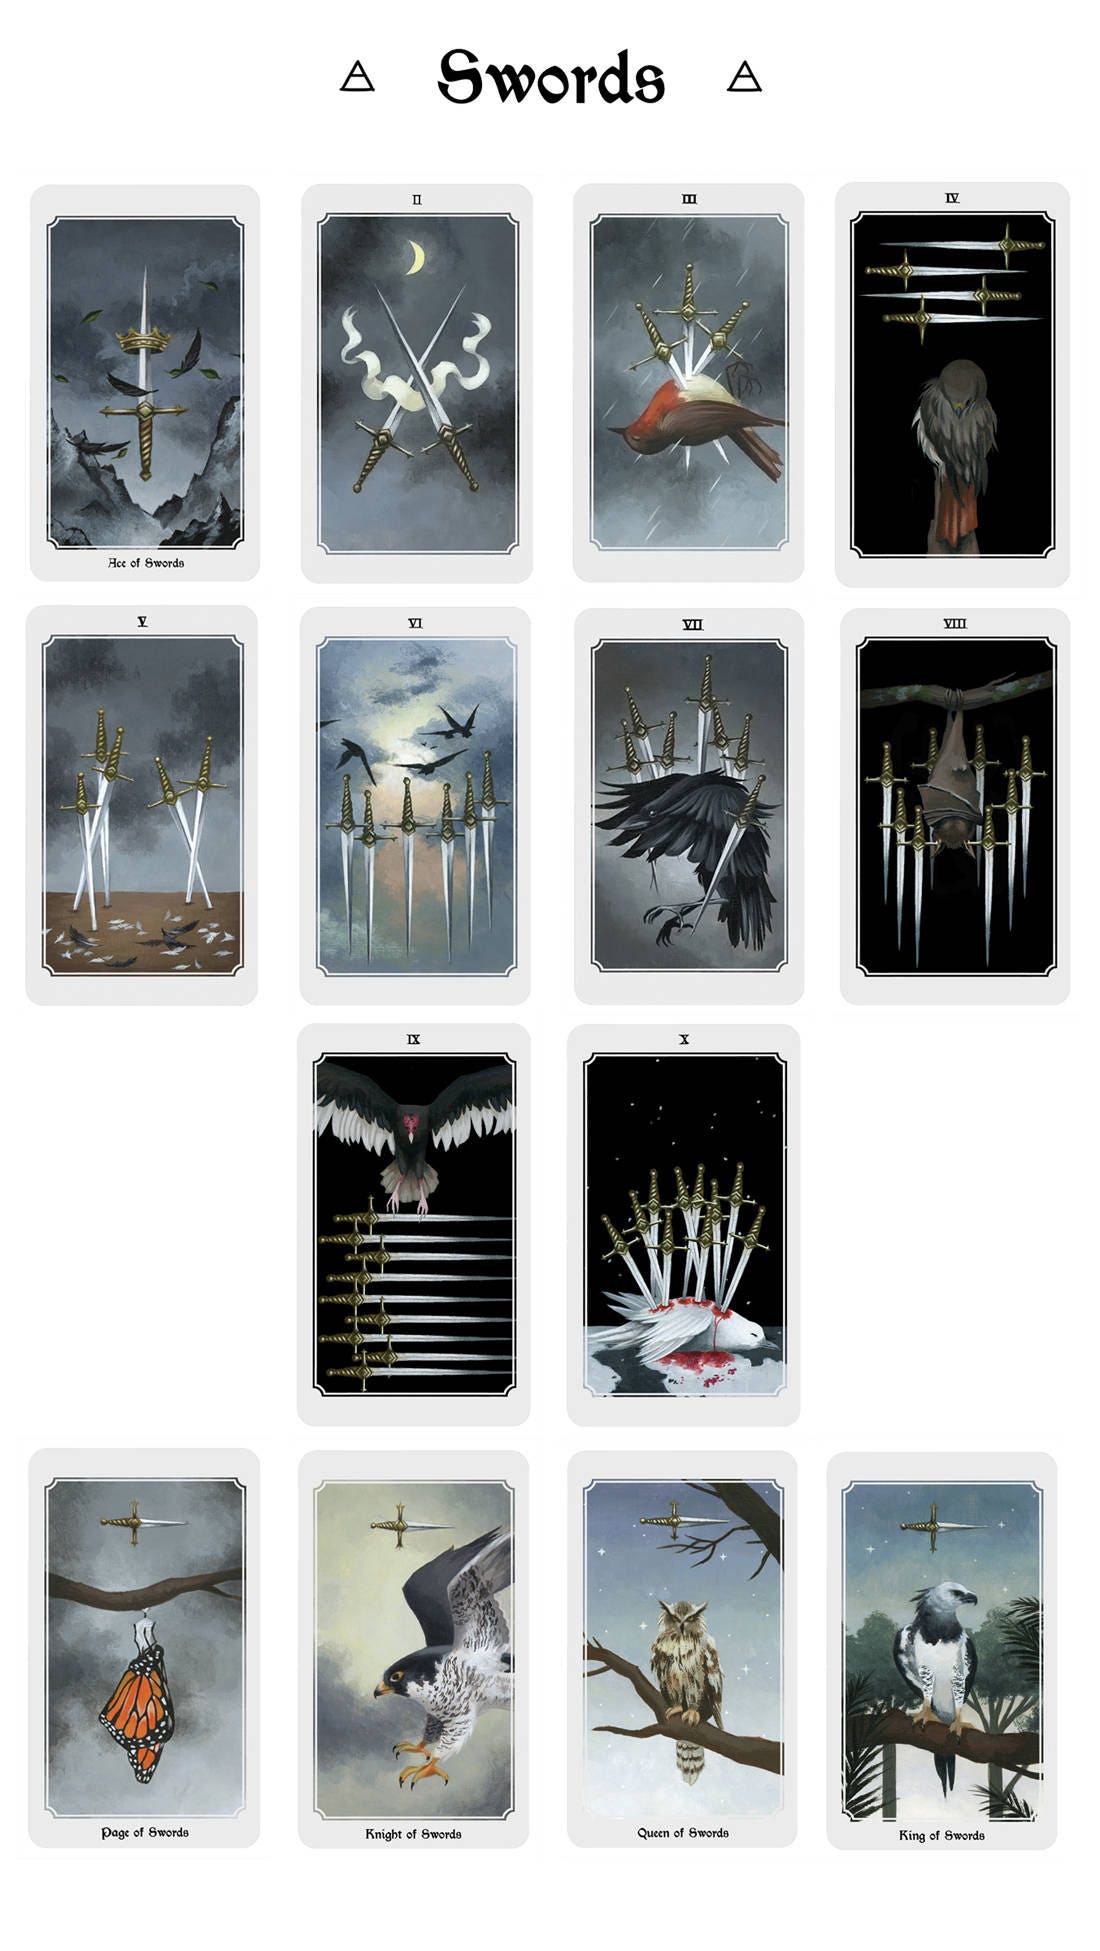 Anima Mundi tarot deck, sold by original artist